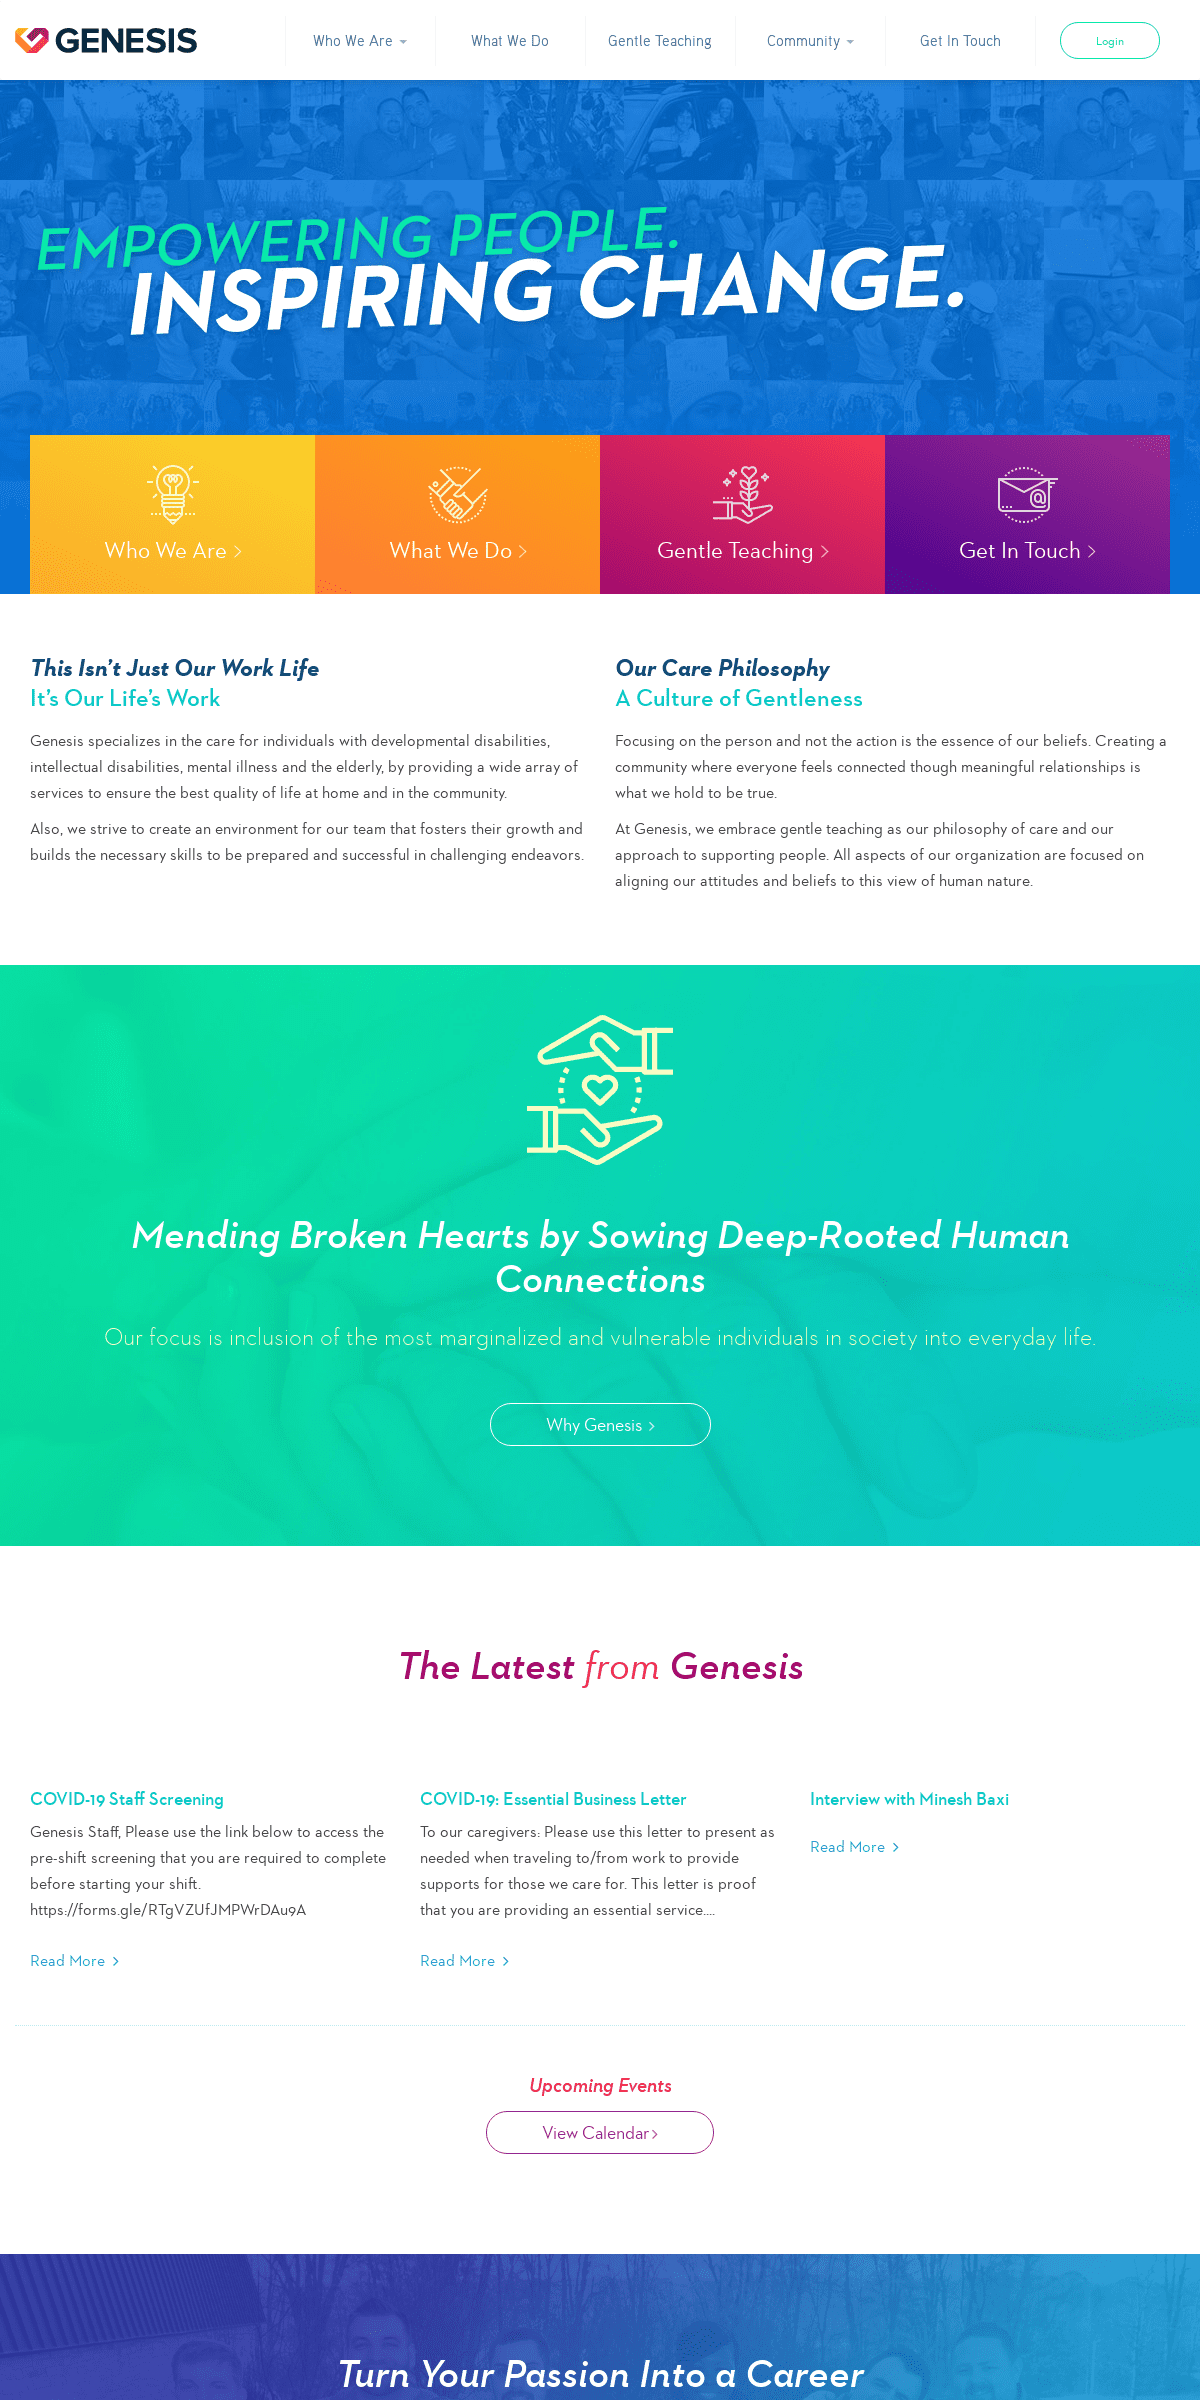 A complete backup of genesiscares.com